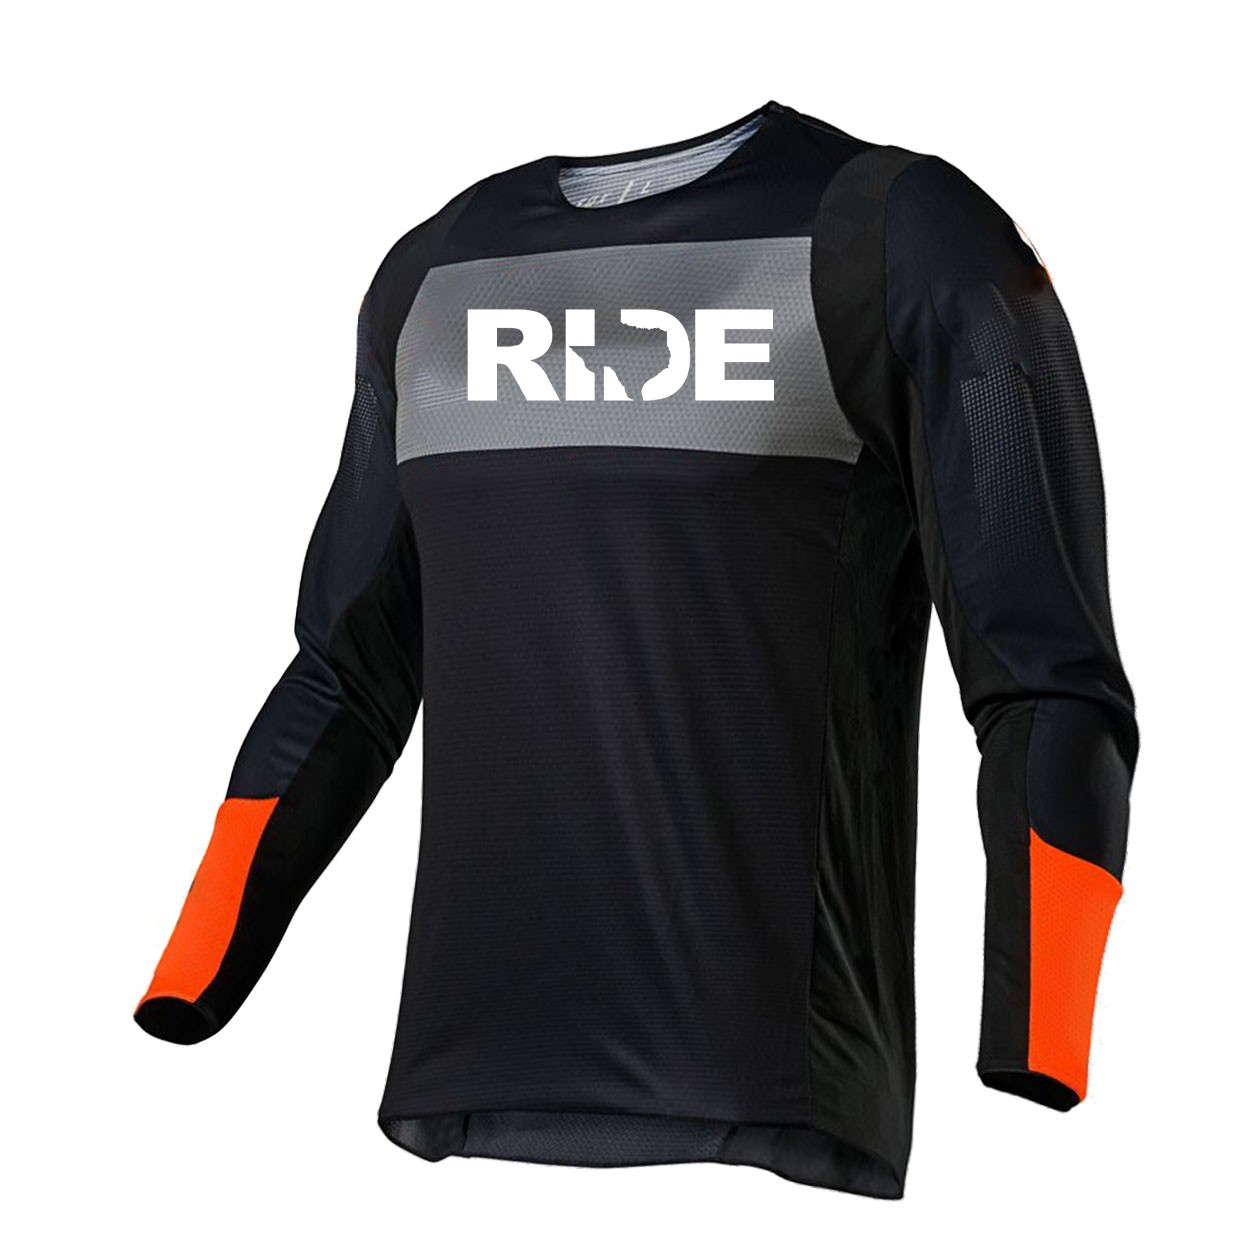 Ride Texas Classic Performance Jersey Long Sleeve Shirt Black/Gray/Orange